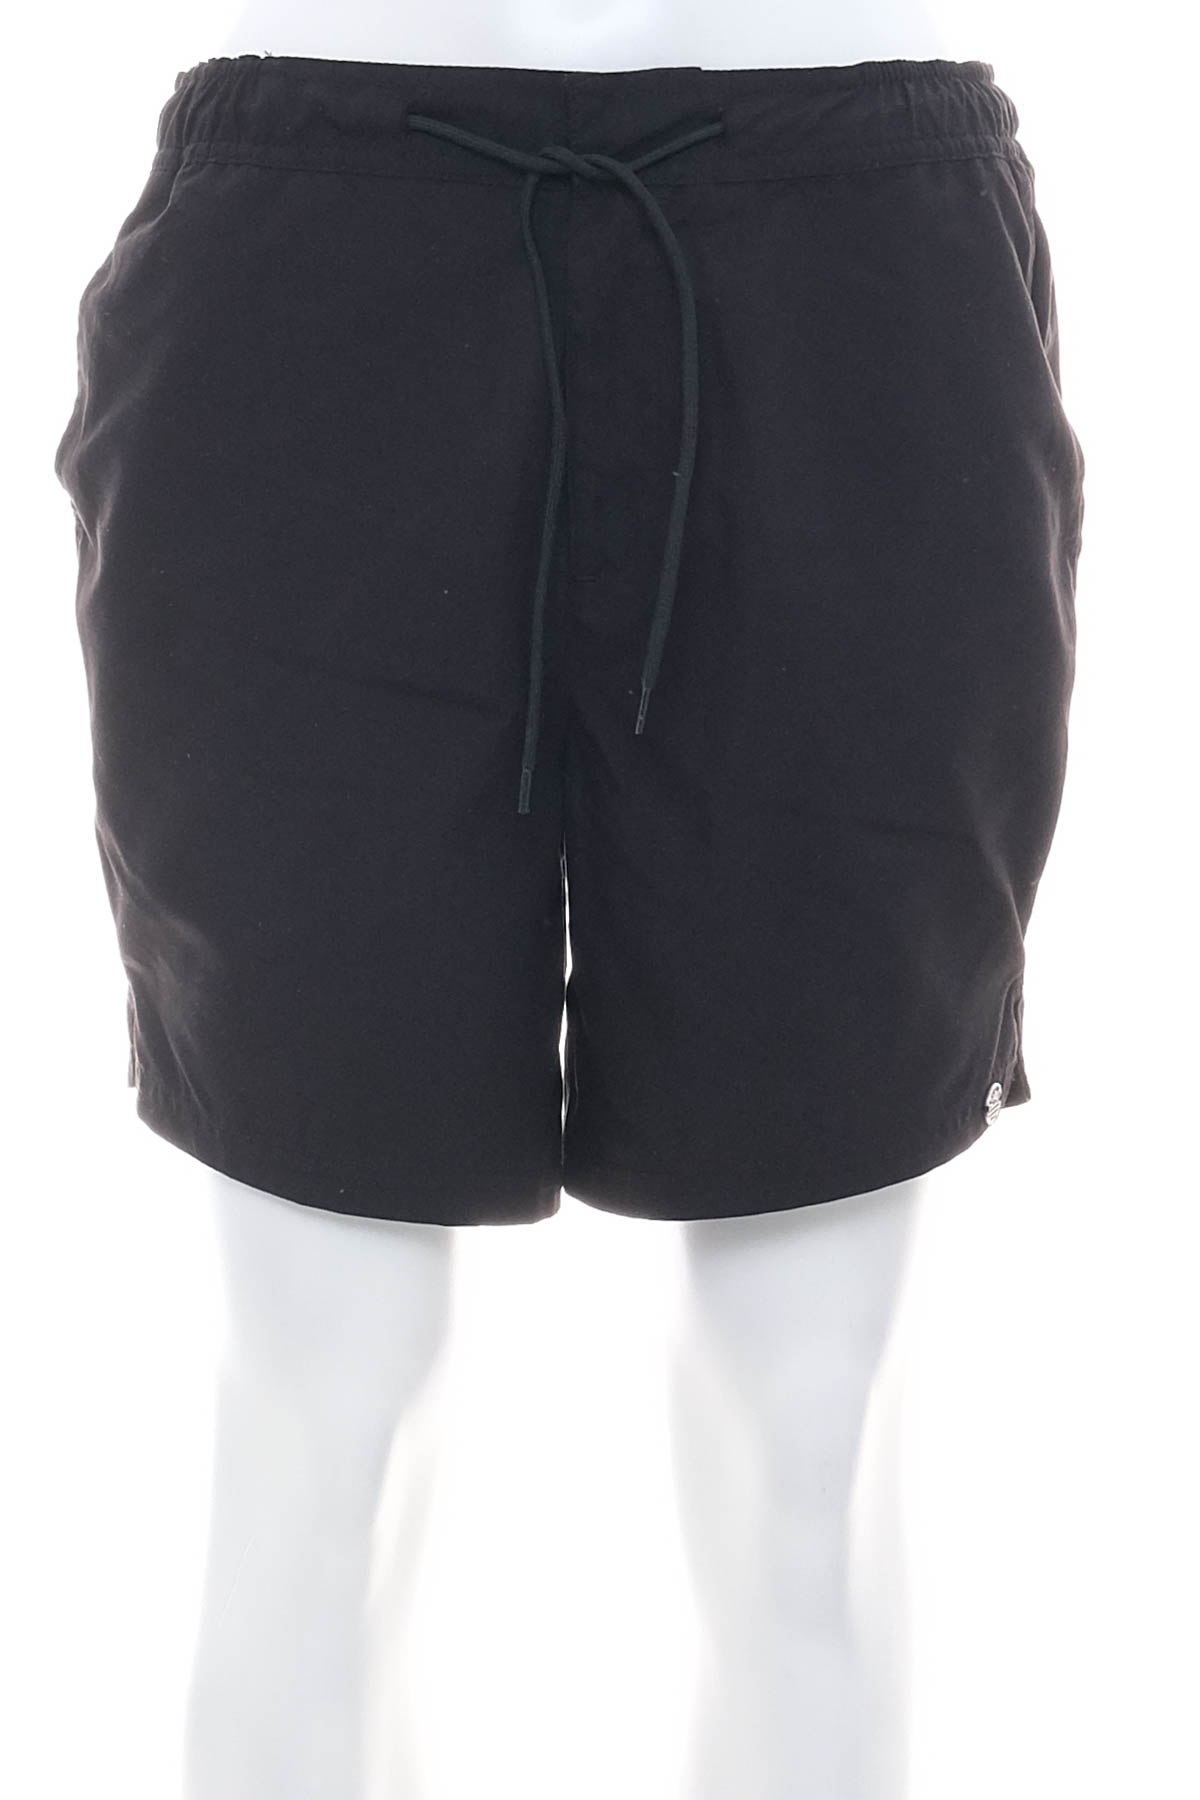 Women's shorts - C&A - 0